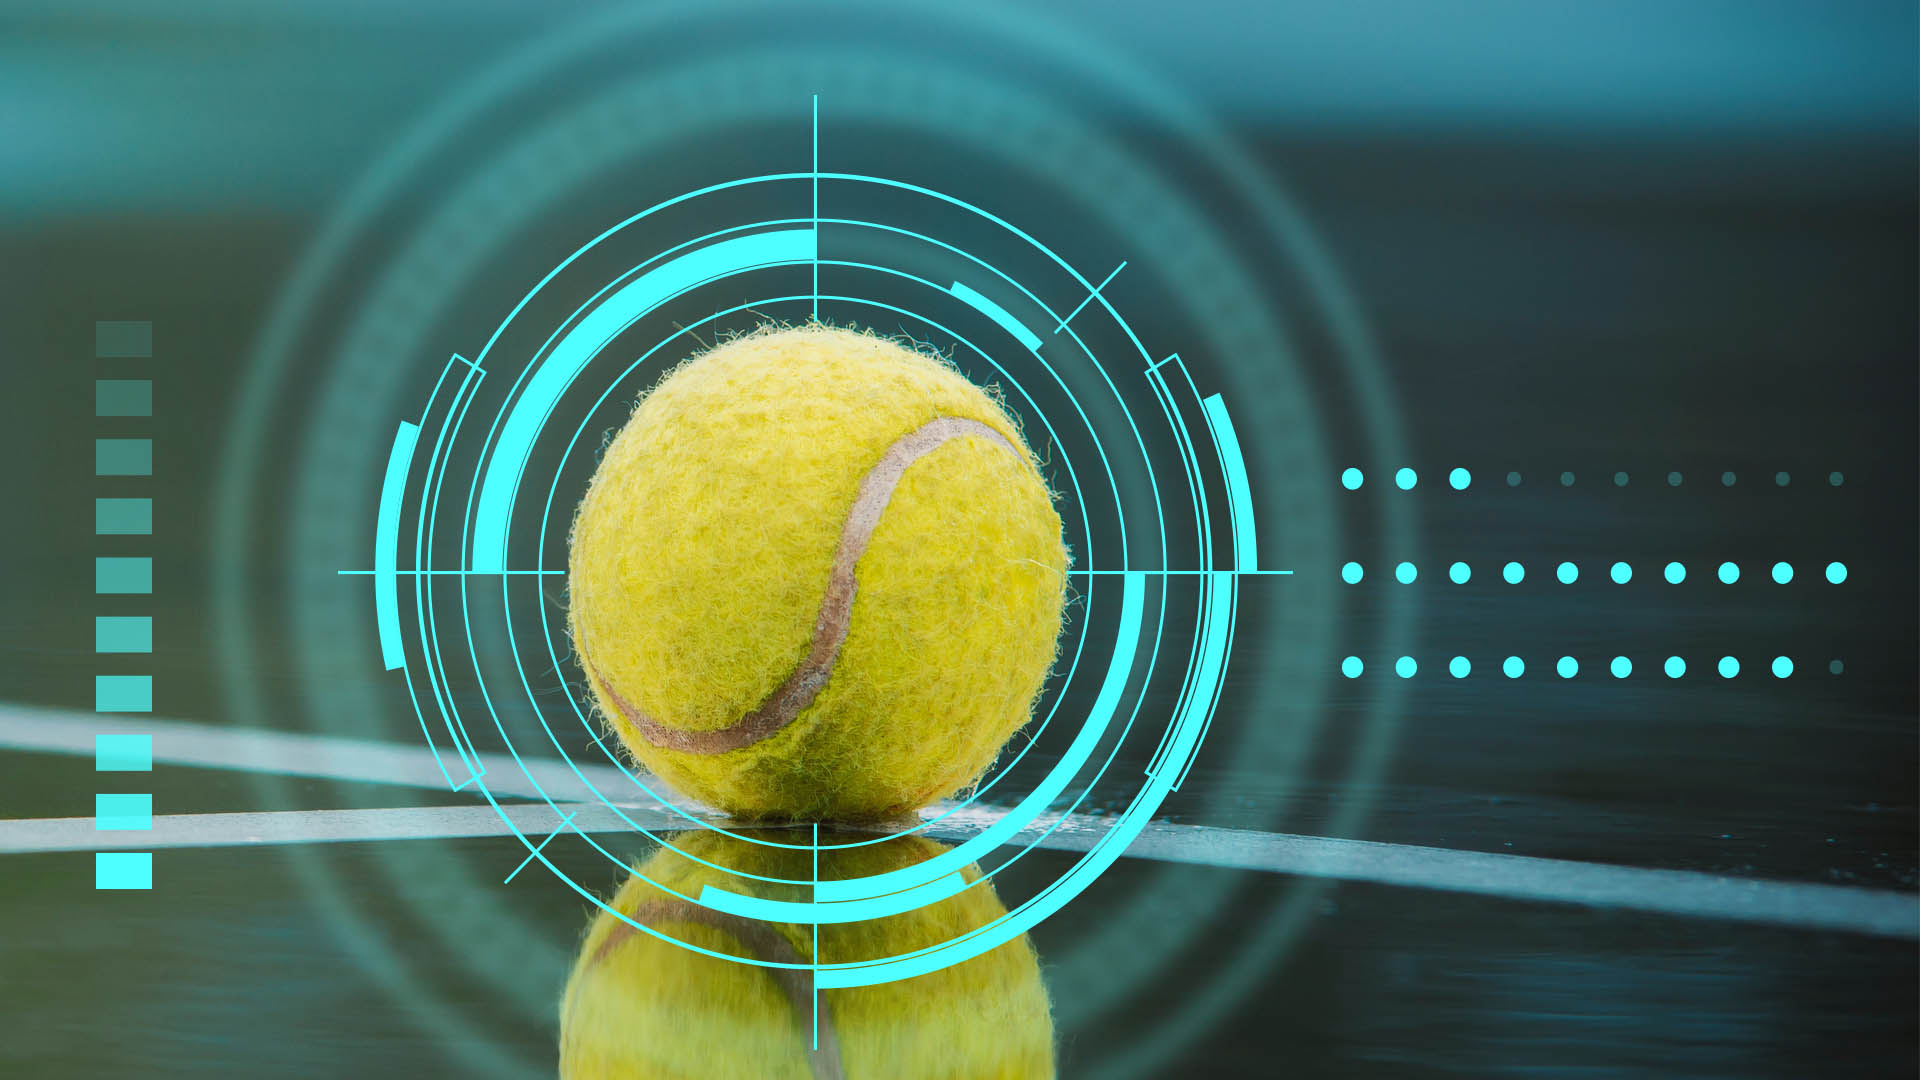 Can Radar Detect Tennis Balls?